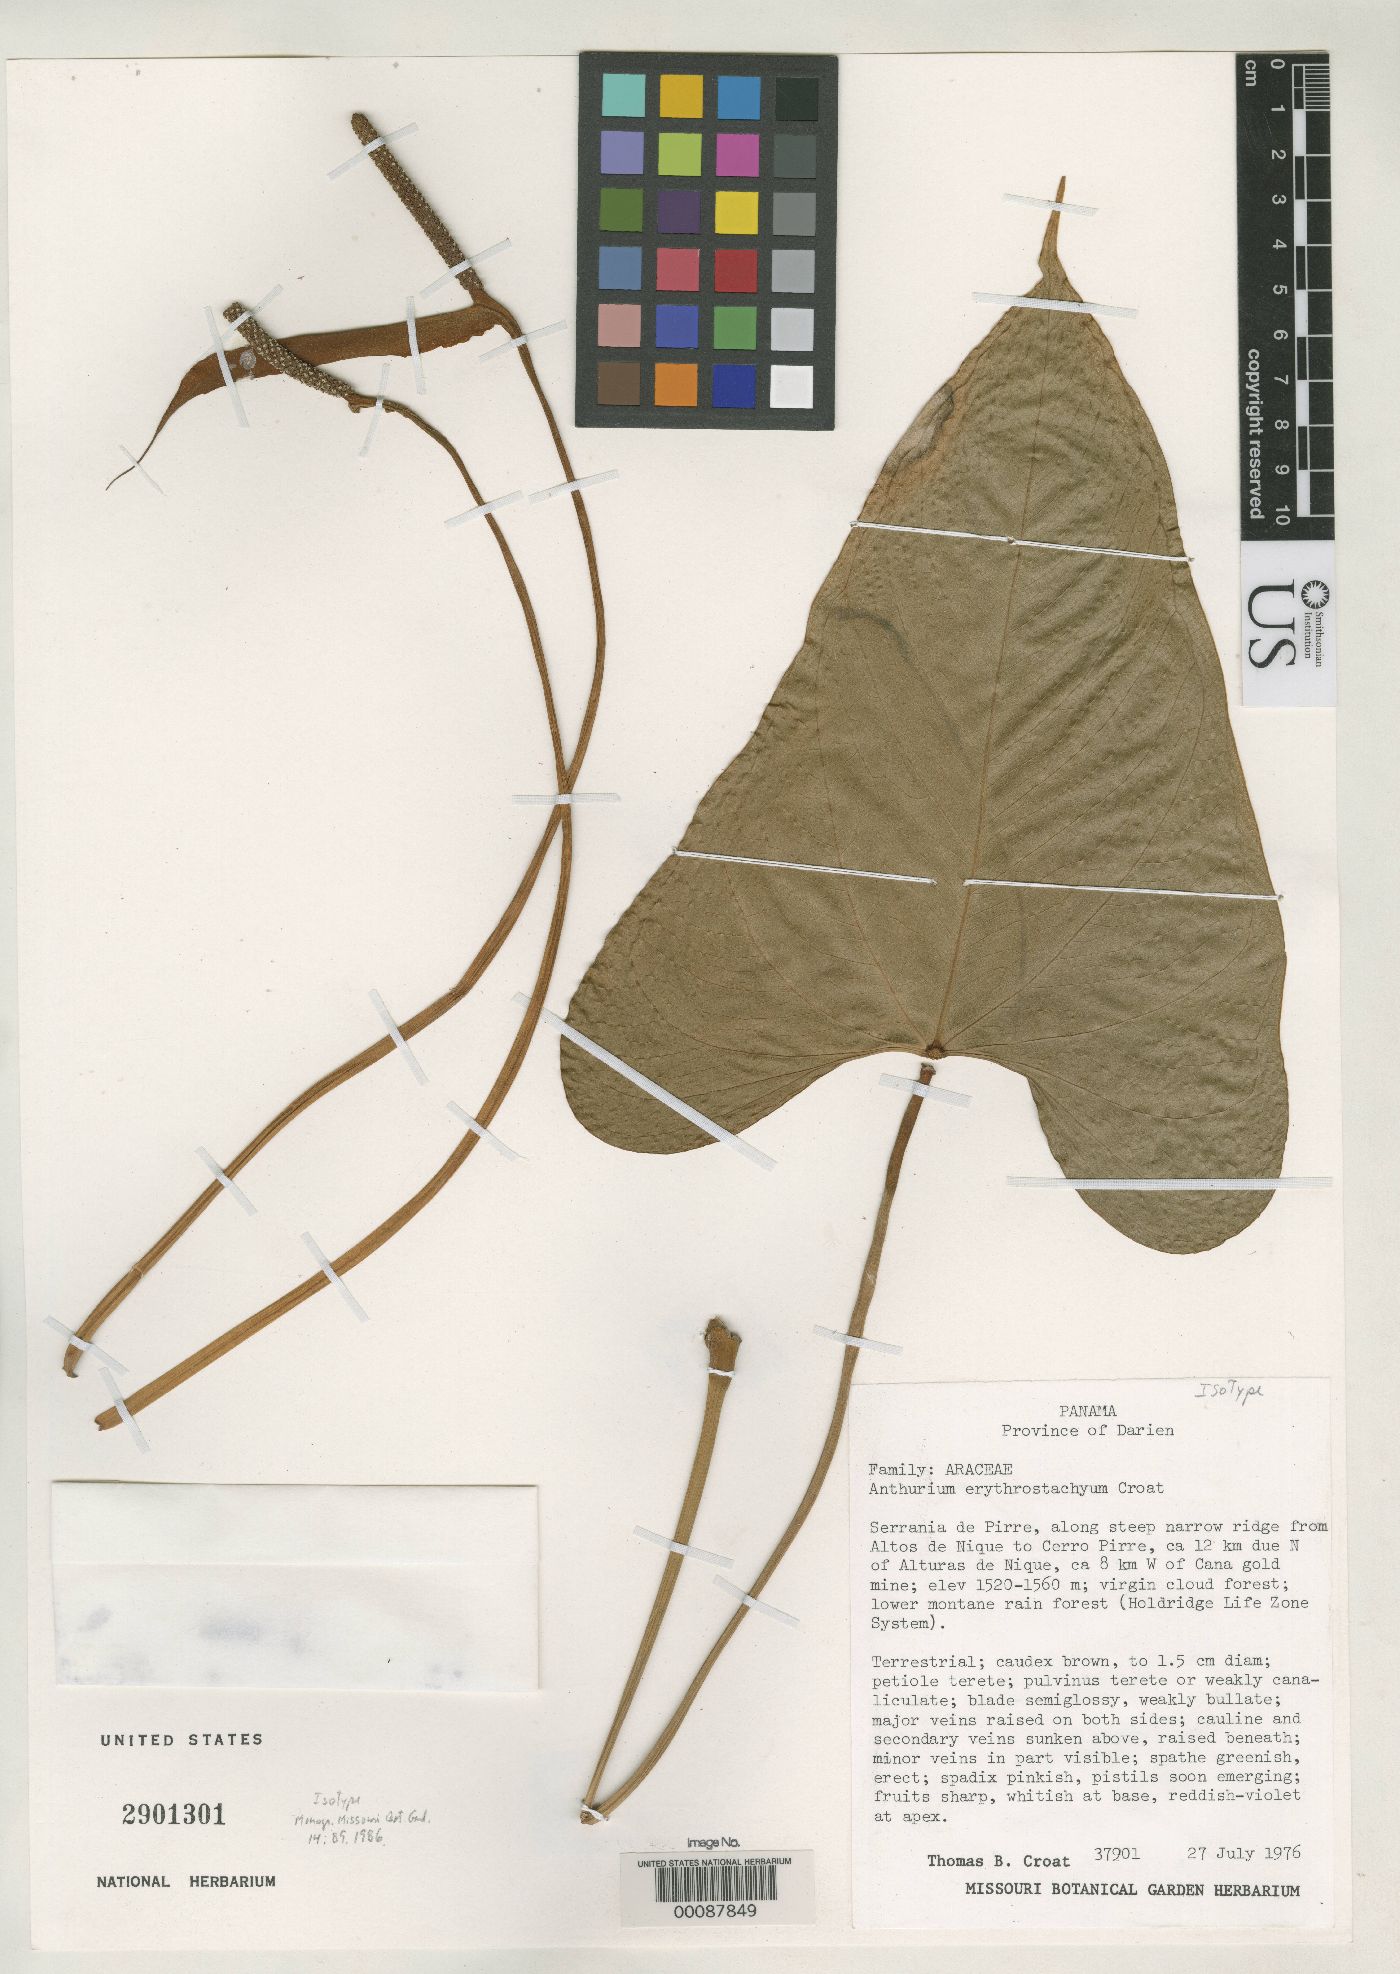 Anthurium erythrostachyum image